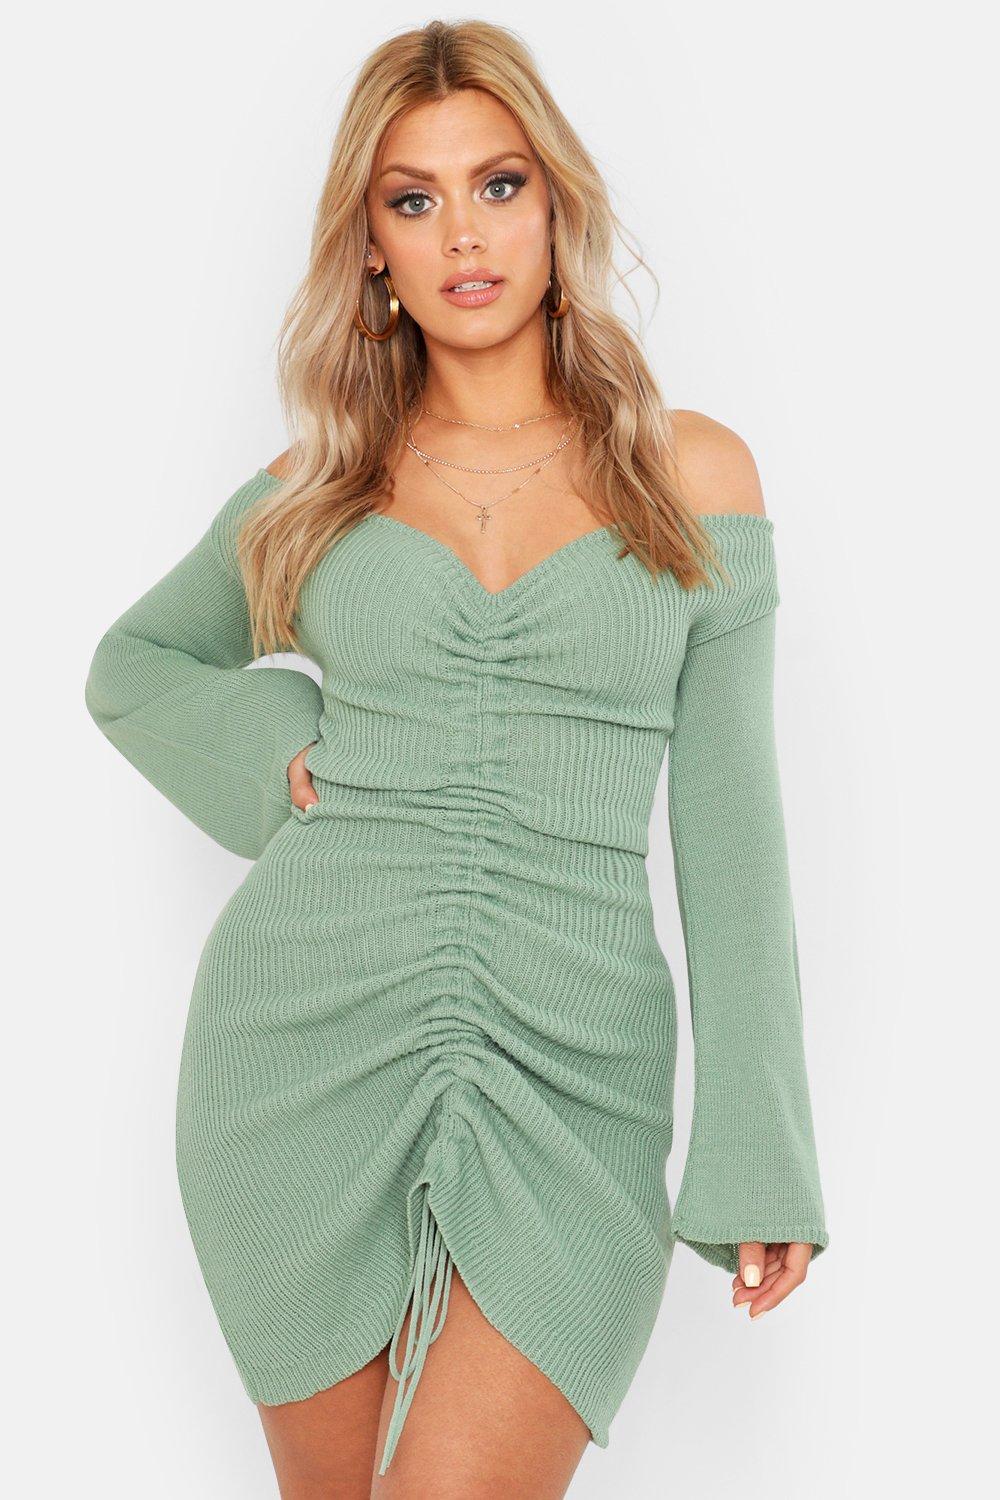 sage green bardot dress